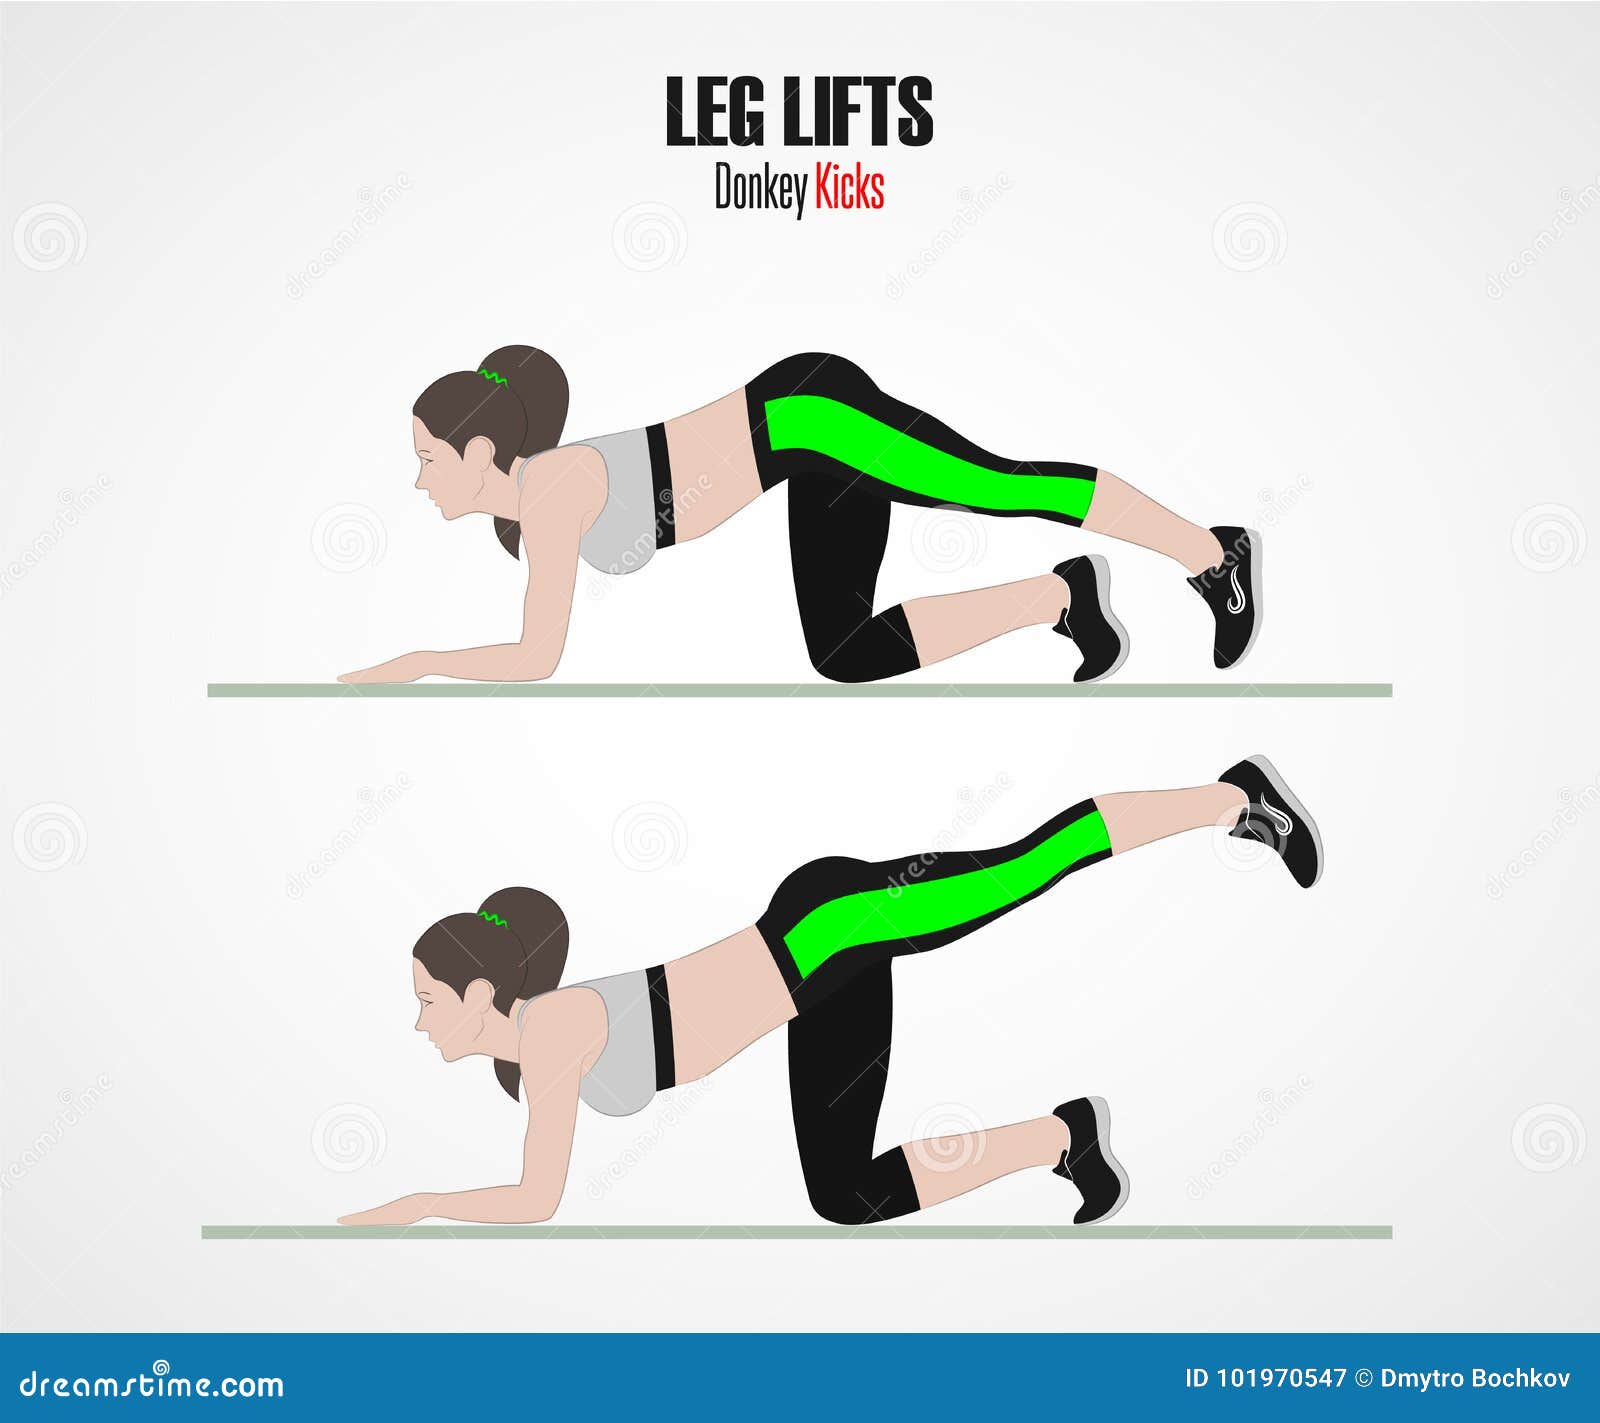 Leg lifts